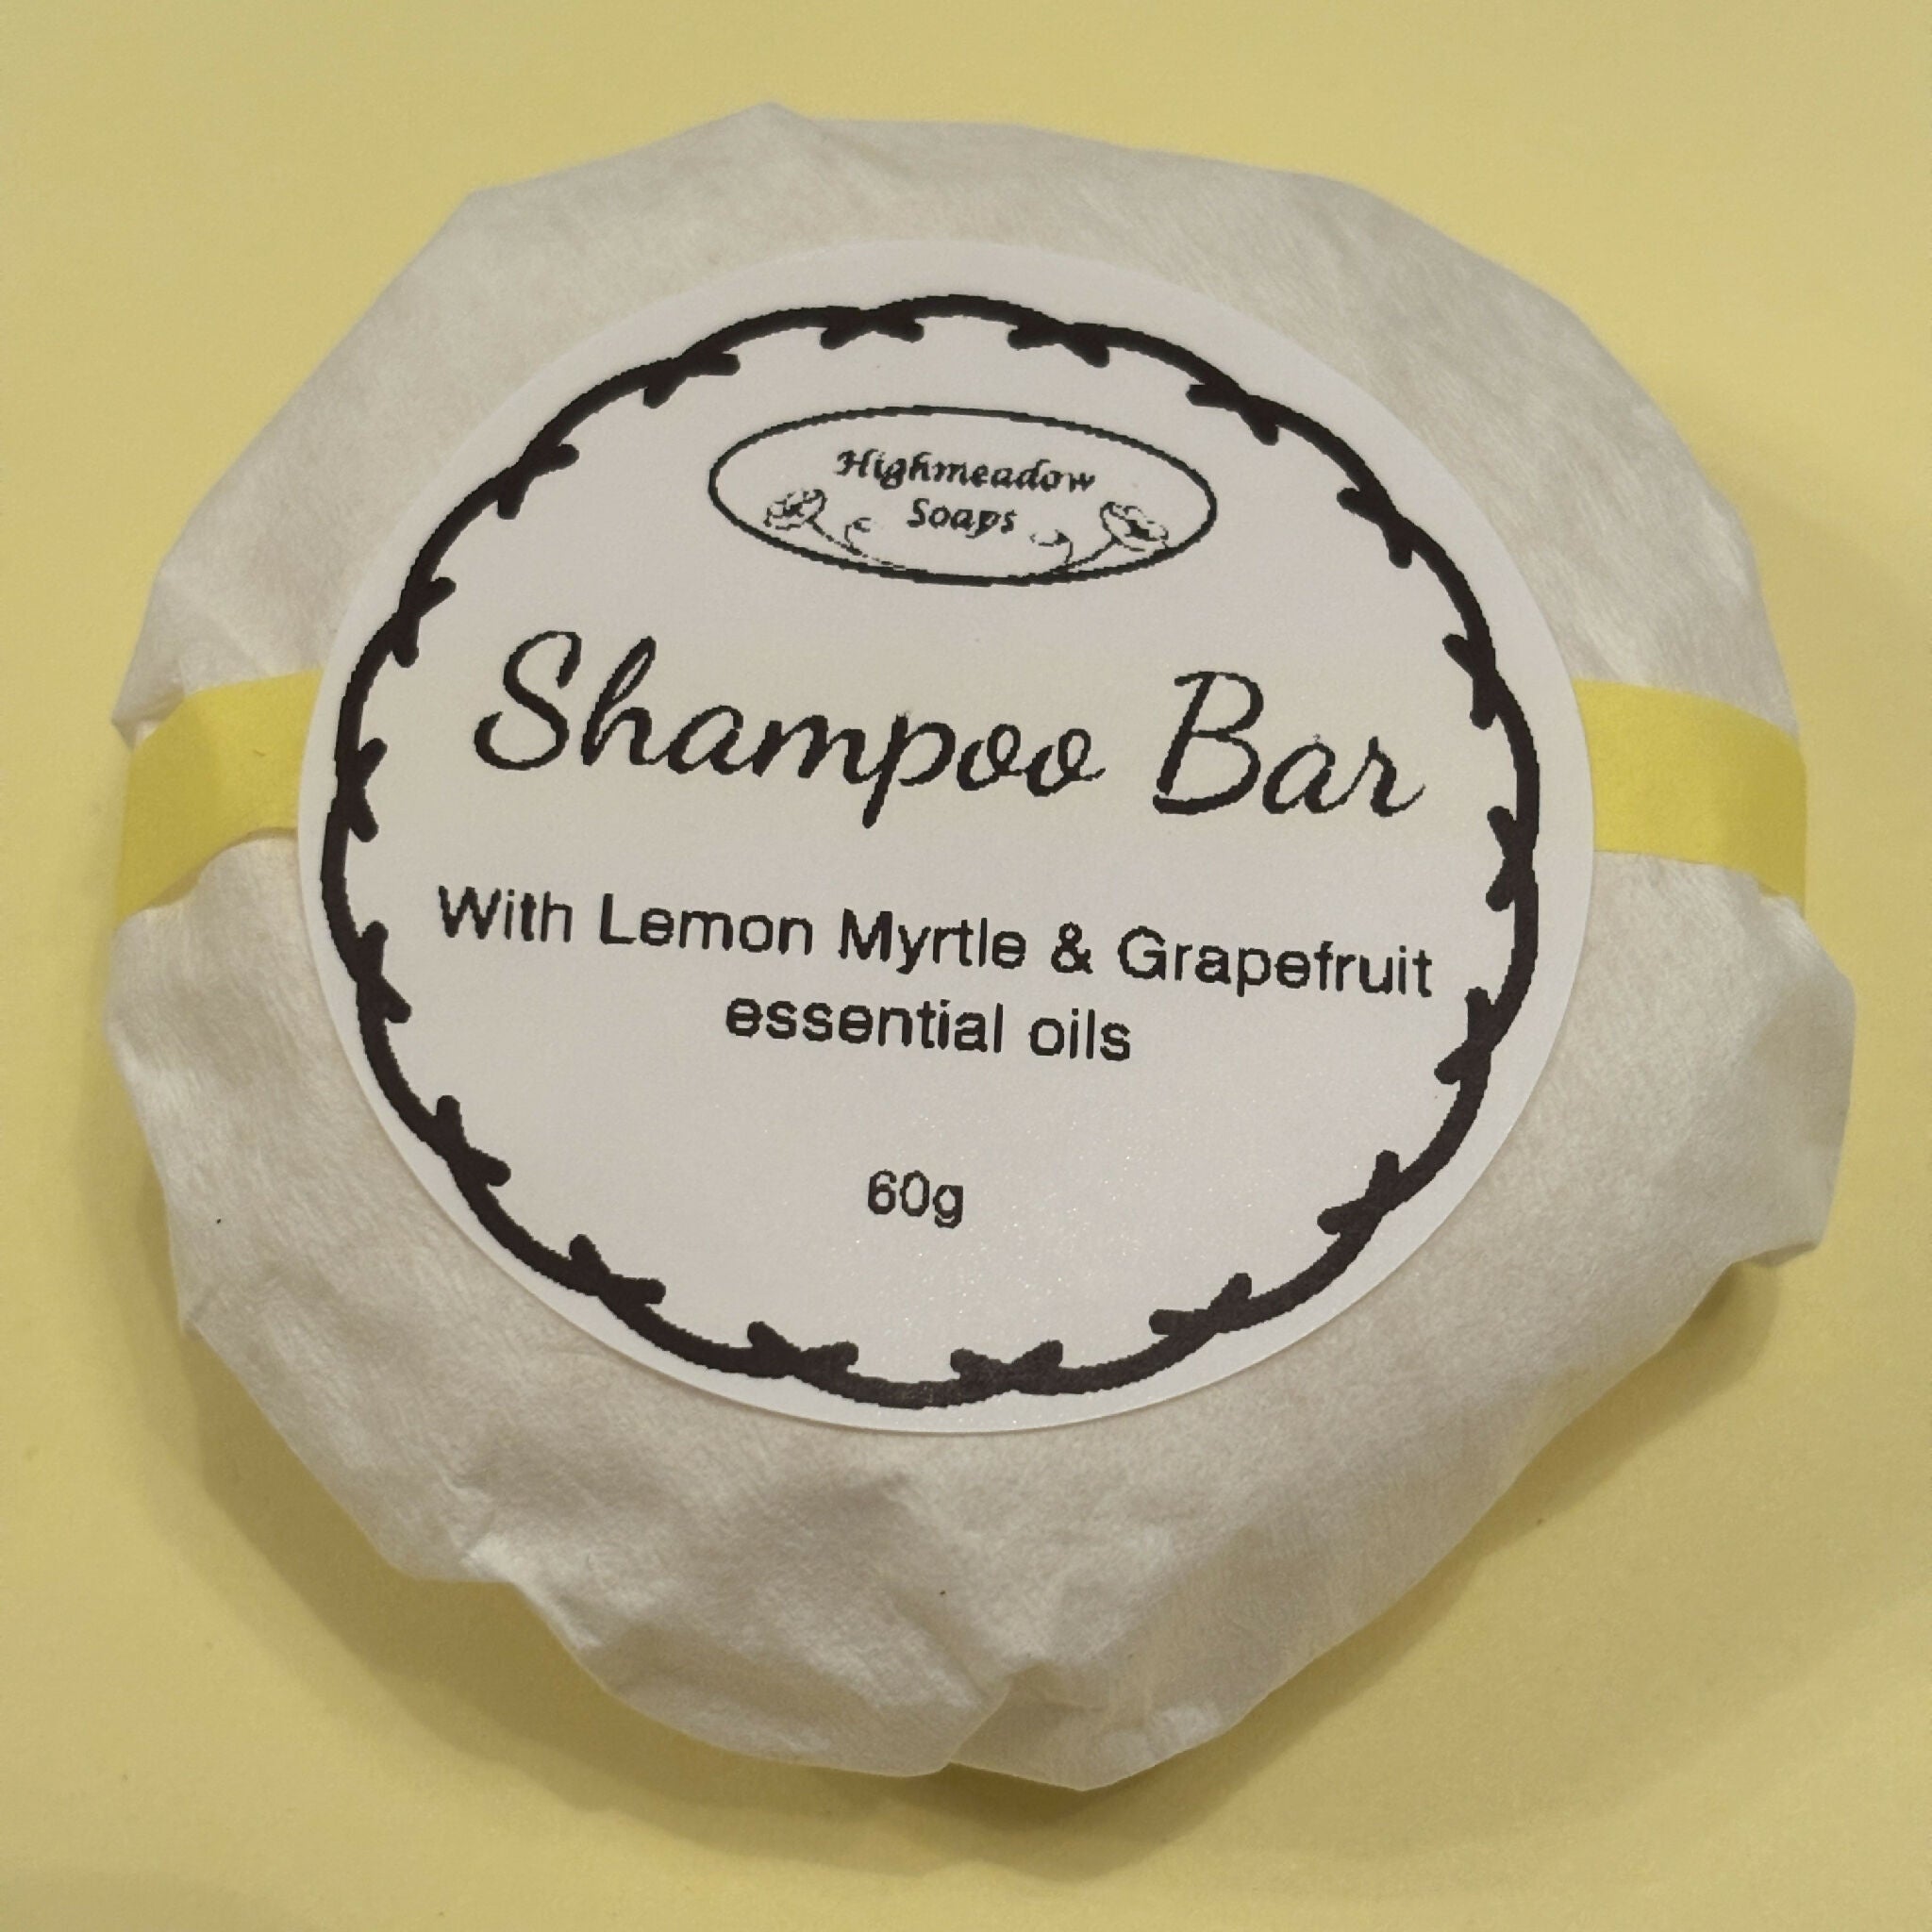 Lemon Myrtle & Grapefruit Shampoo Bar 1